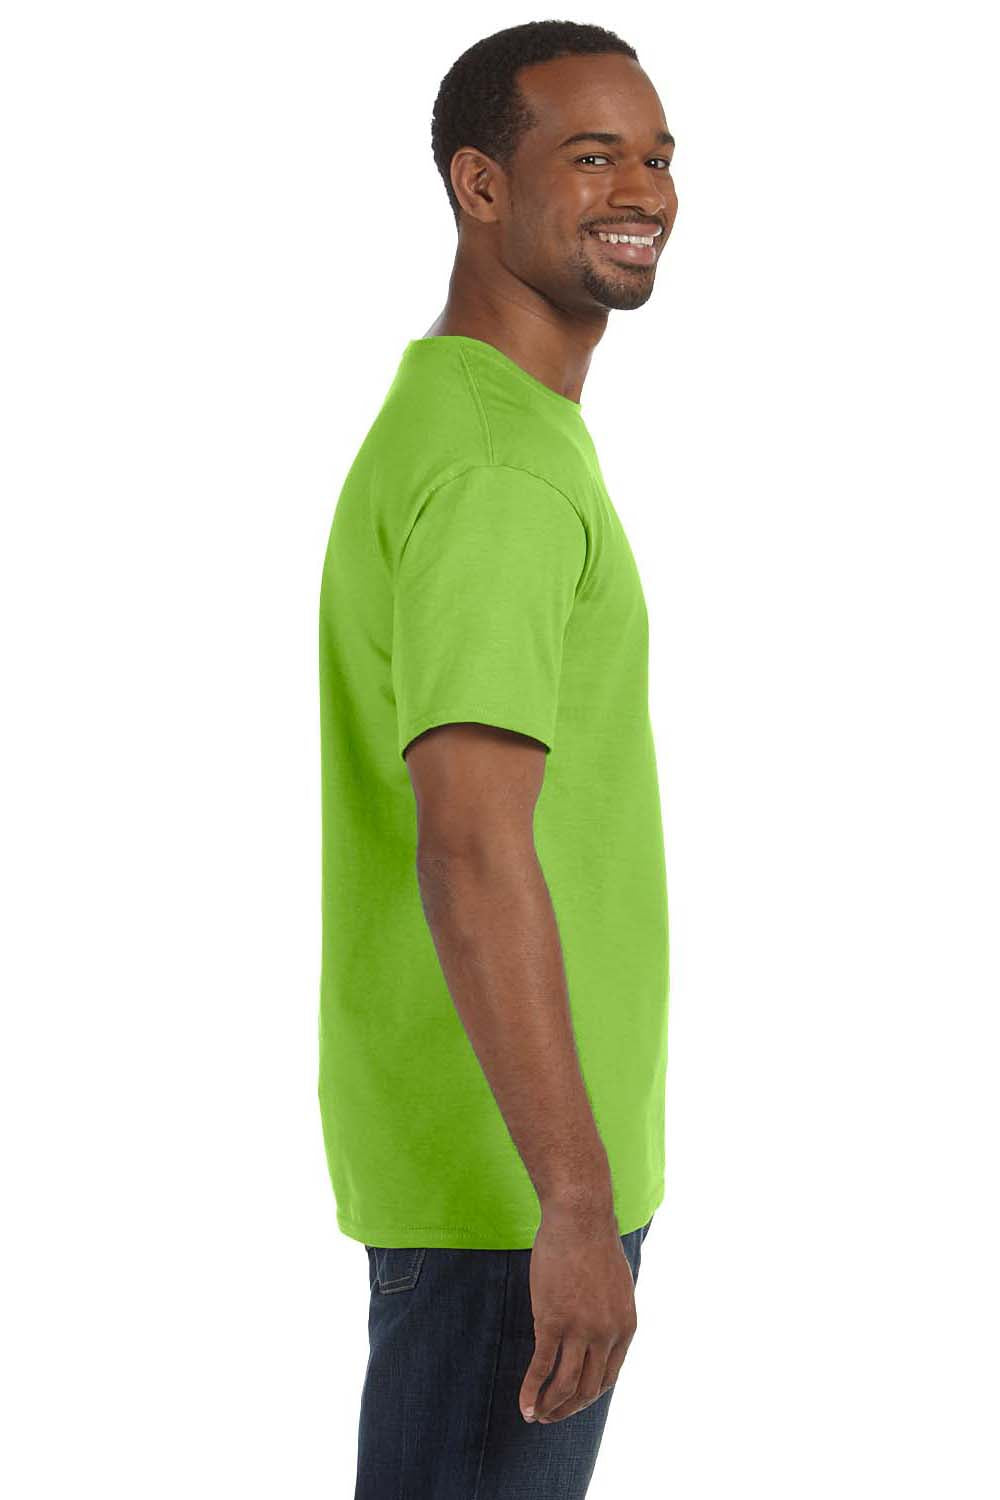 Hanes 5250T Mens ComfortSoft Short Sleeve Crewneck T-Shirt Lime Green Side